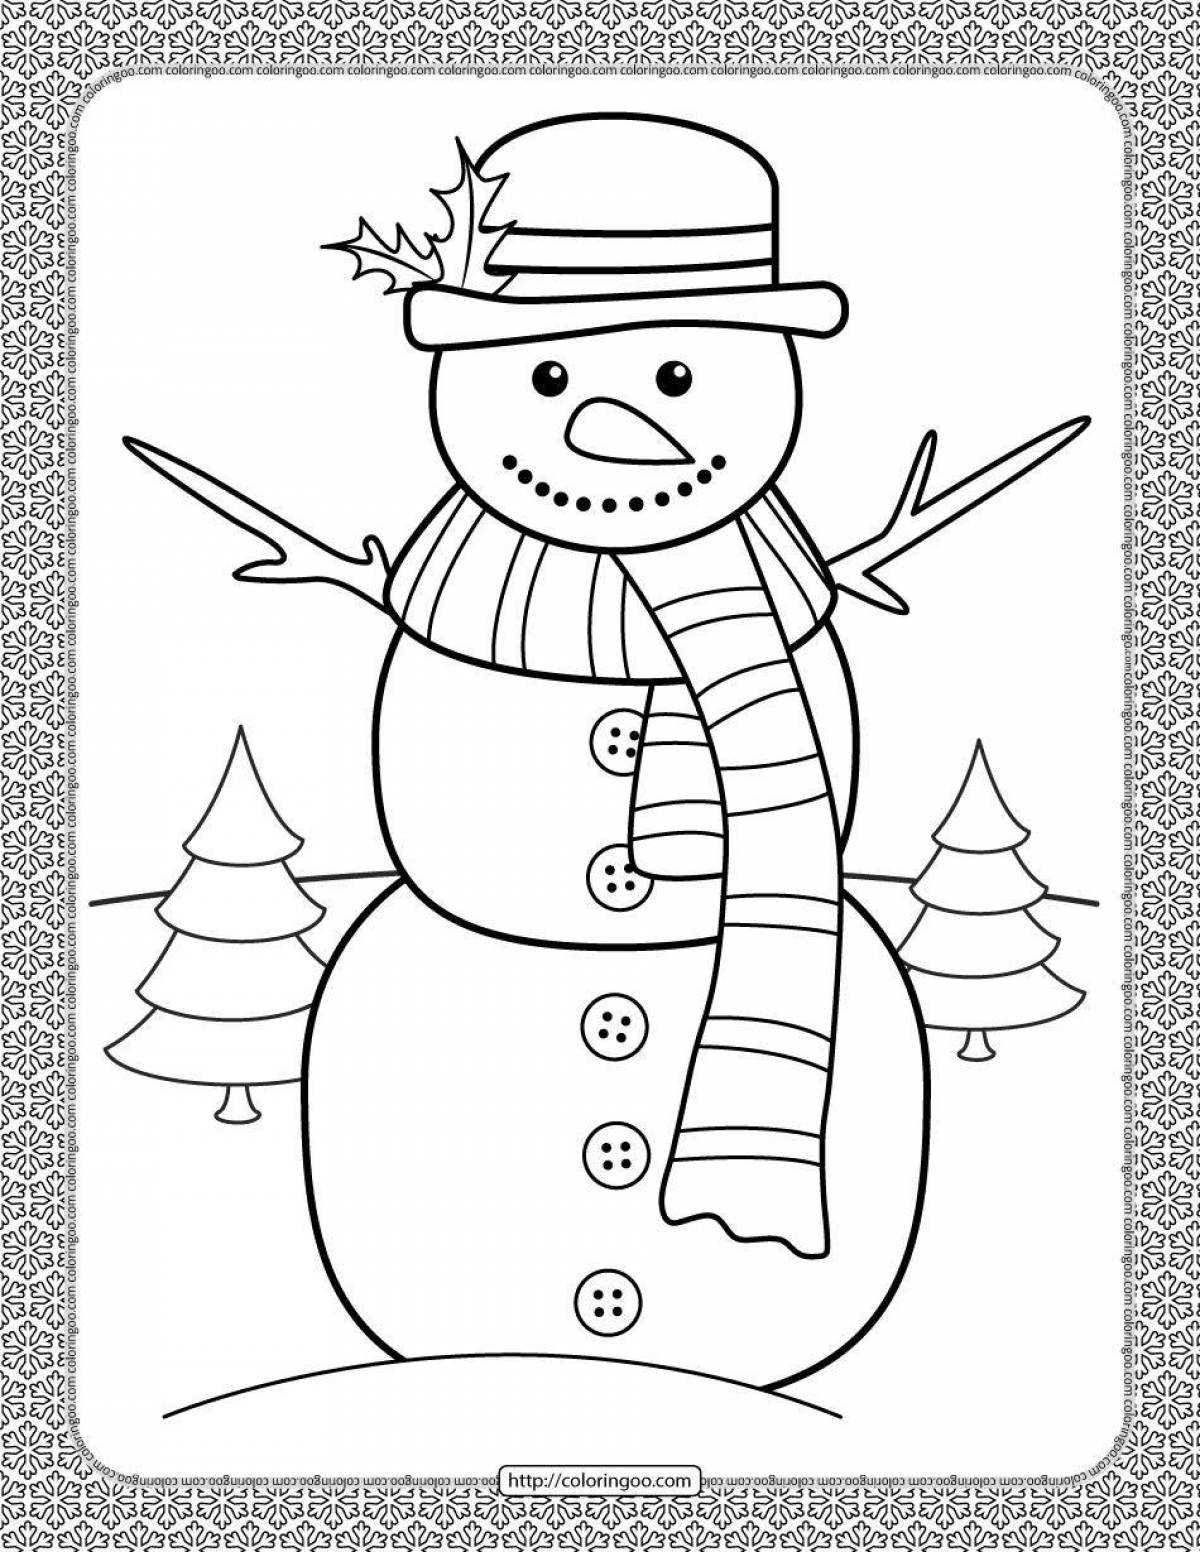 Coloring cute mega snowman